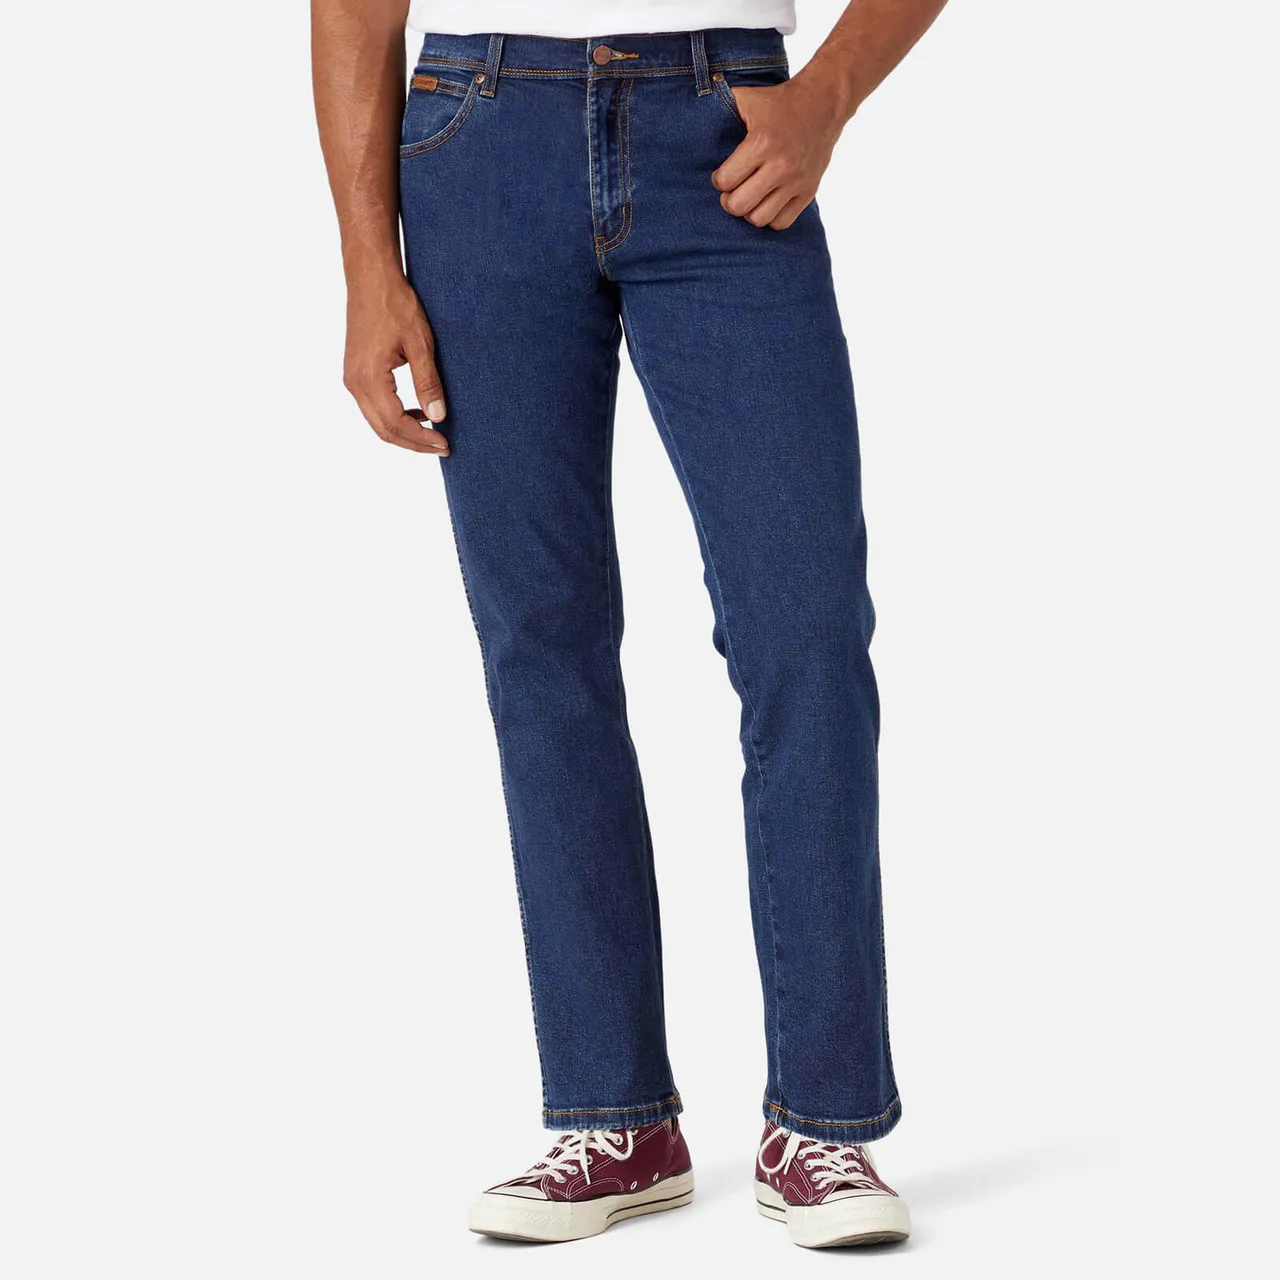 Wrangler Men's Texas Authentic Straight Fit Jeans - Darkstone